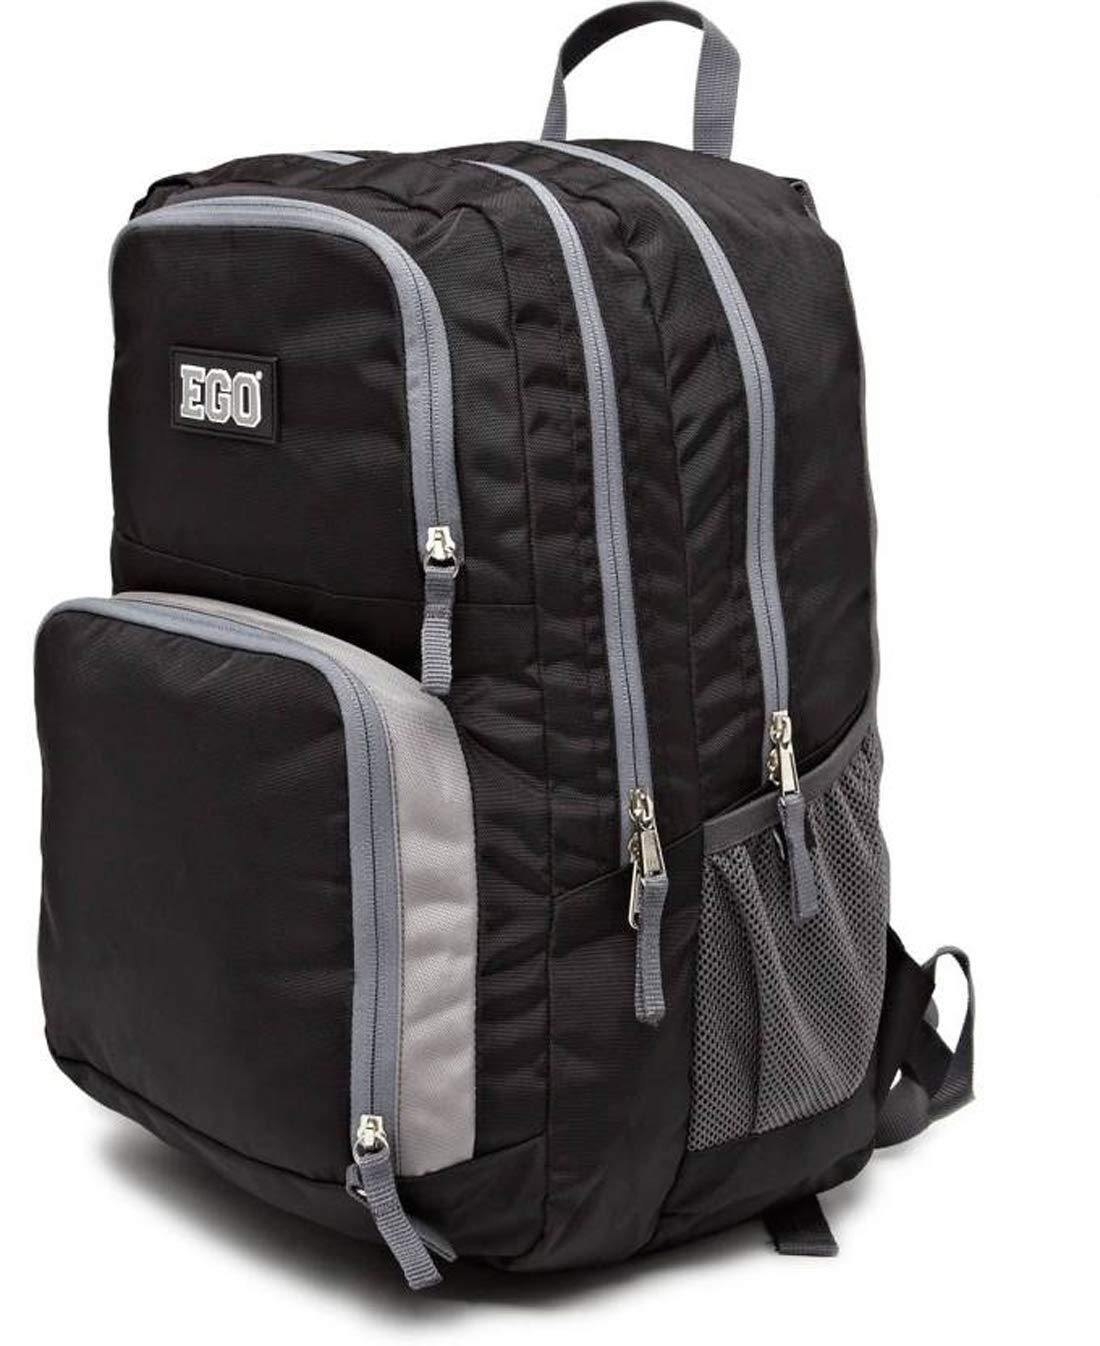 Prokick Ego 33 Ltrs Large Lite Weight Waterproof Casual Backpack |Travel Bag | School Bag, Black - Best Price online Prokicksports.com